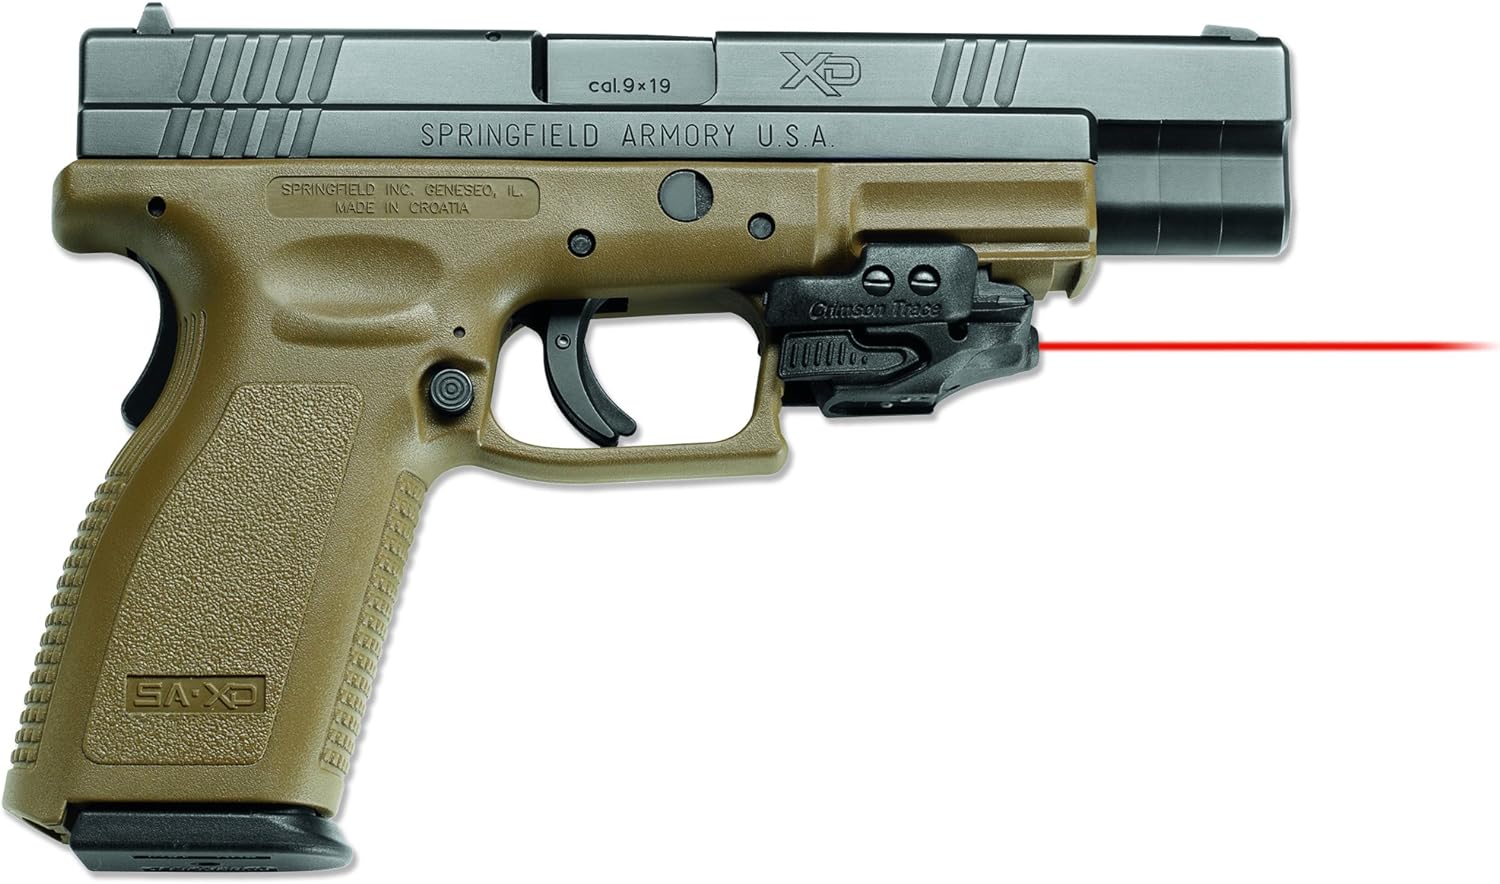 a crimson trace laser sight on a springfield pistol